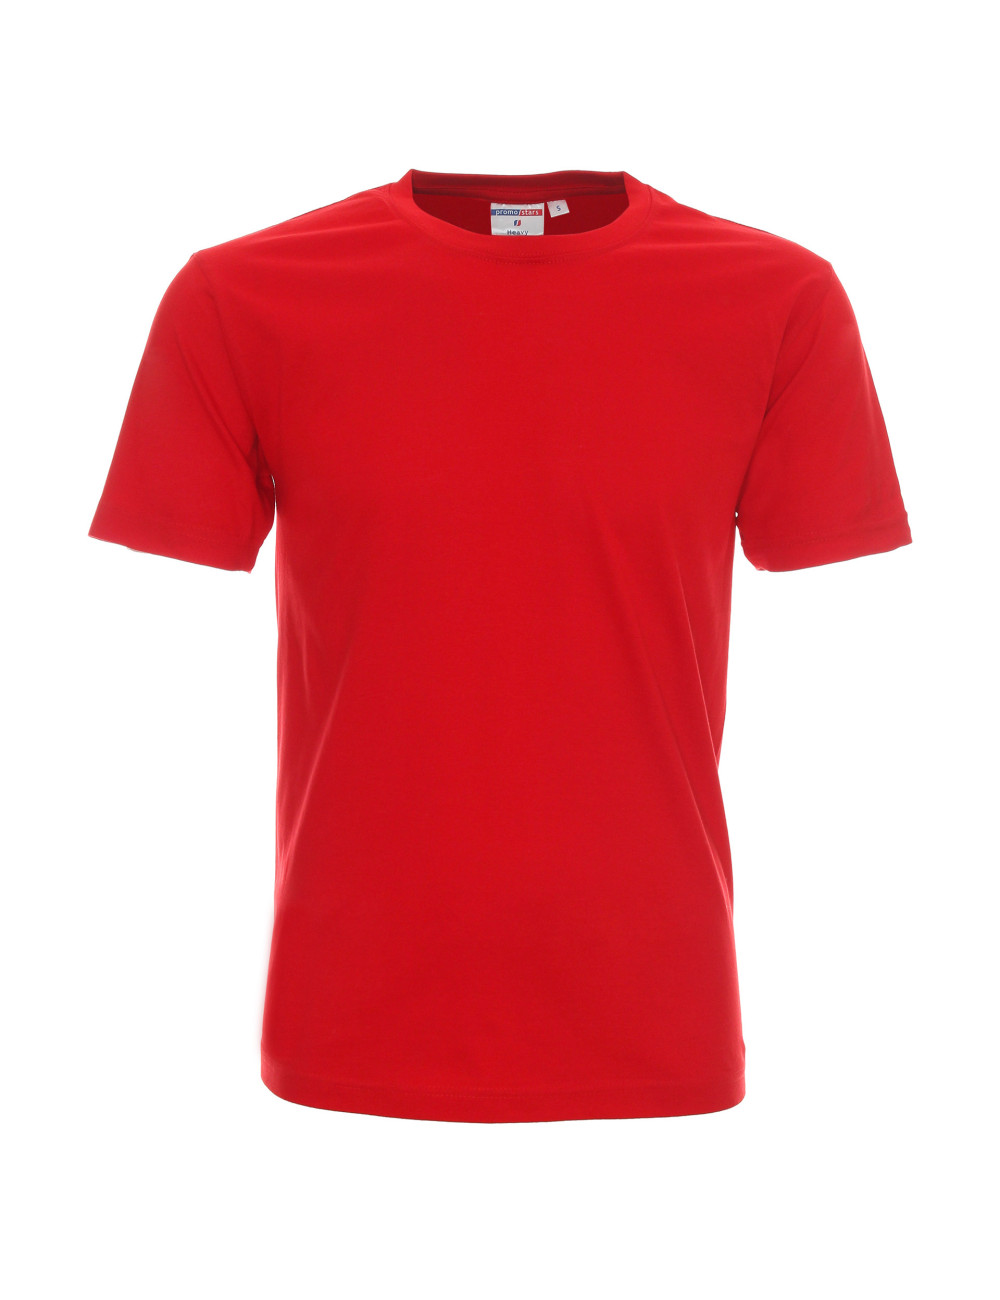 Heavy men`s t-shirt 170 red Promostars